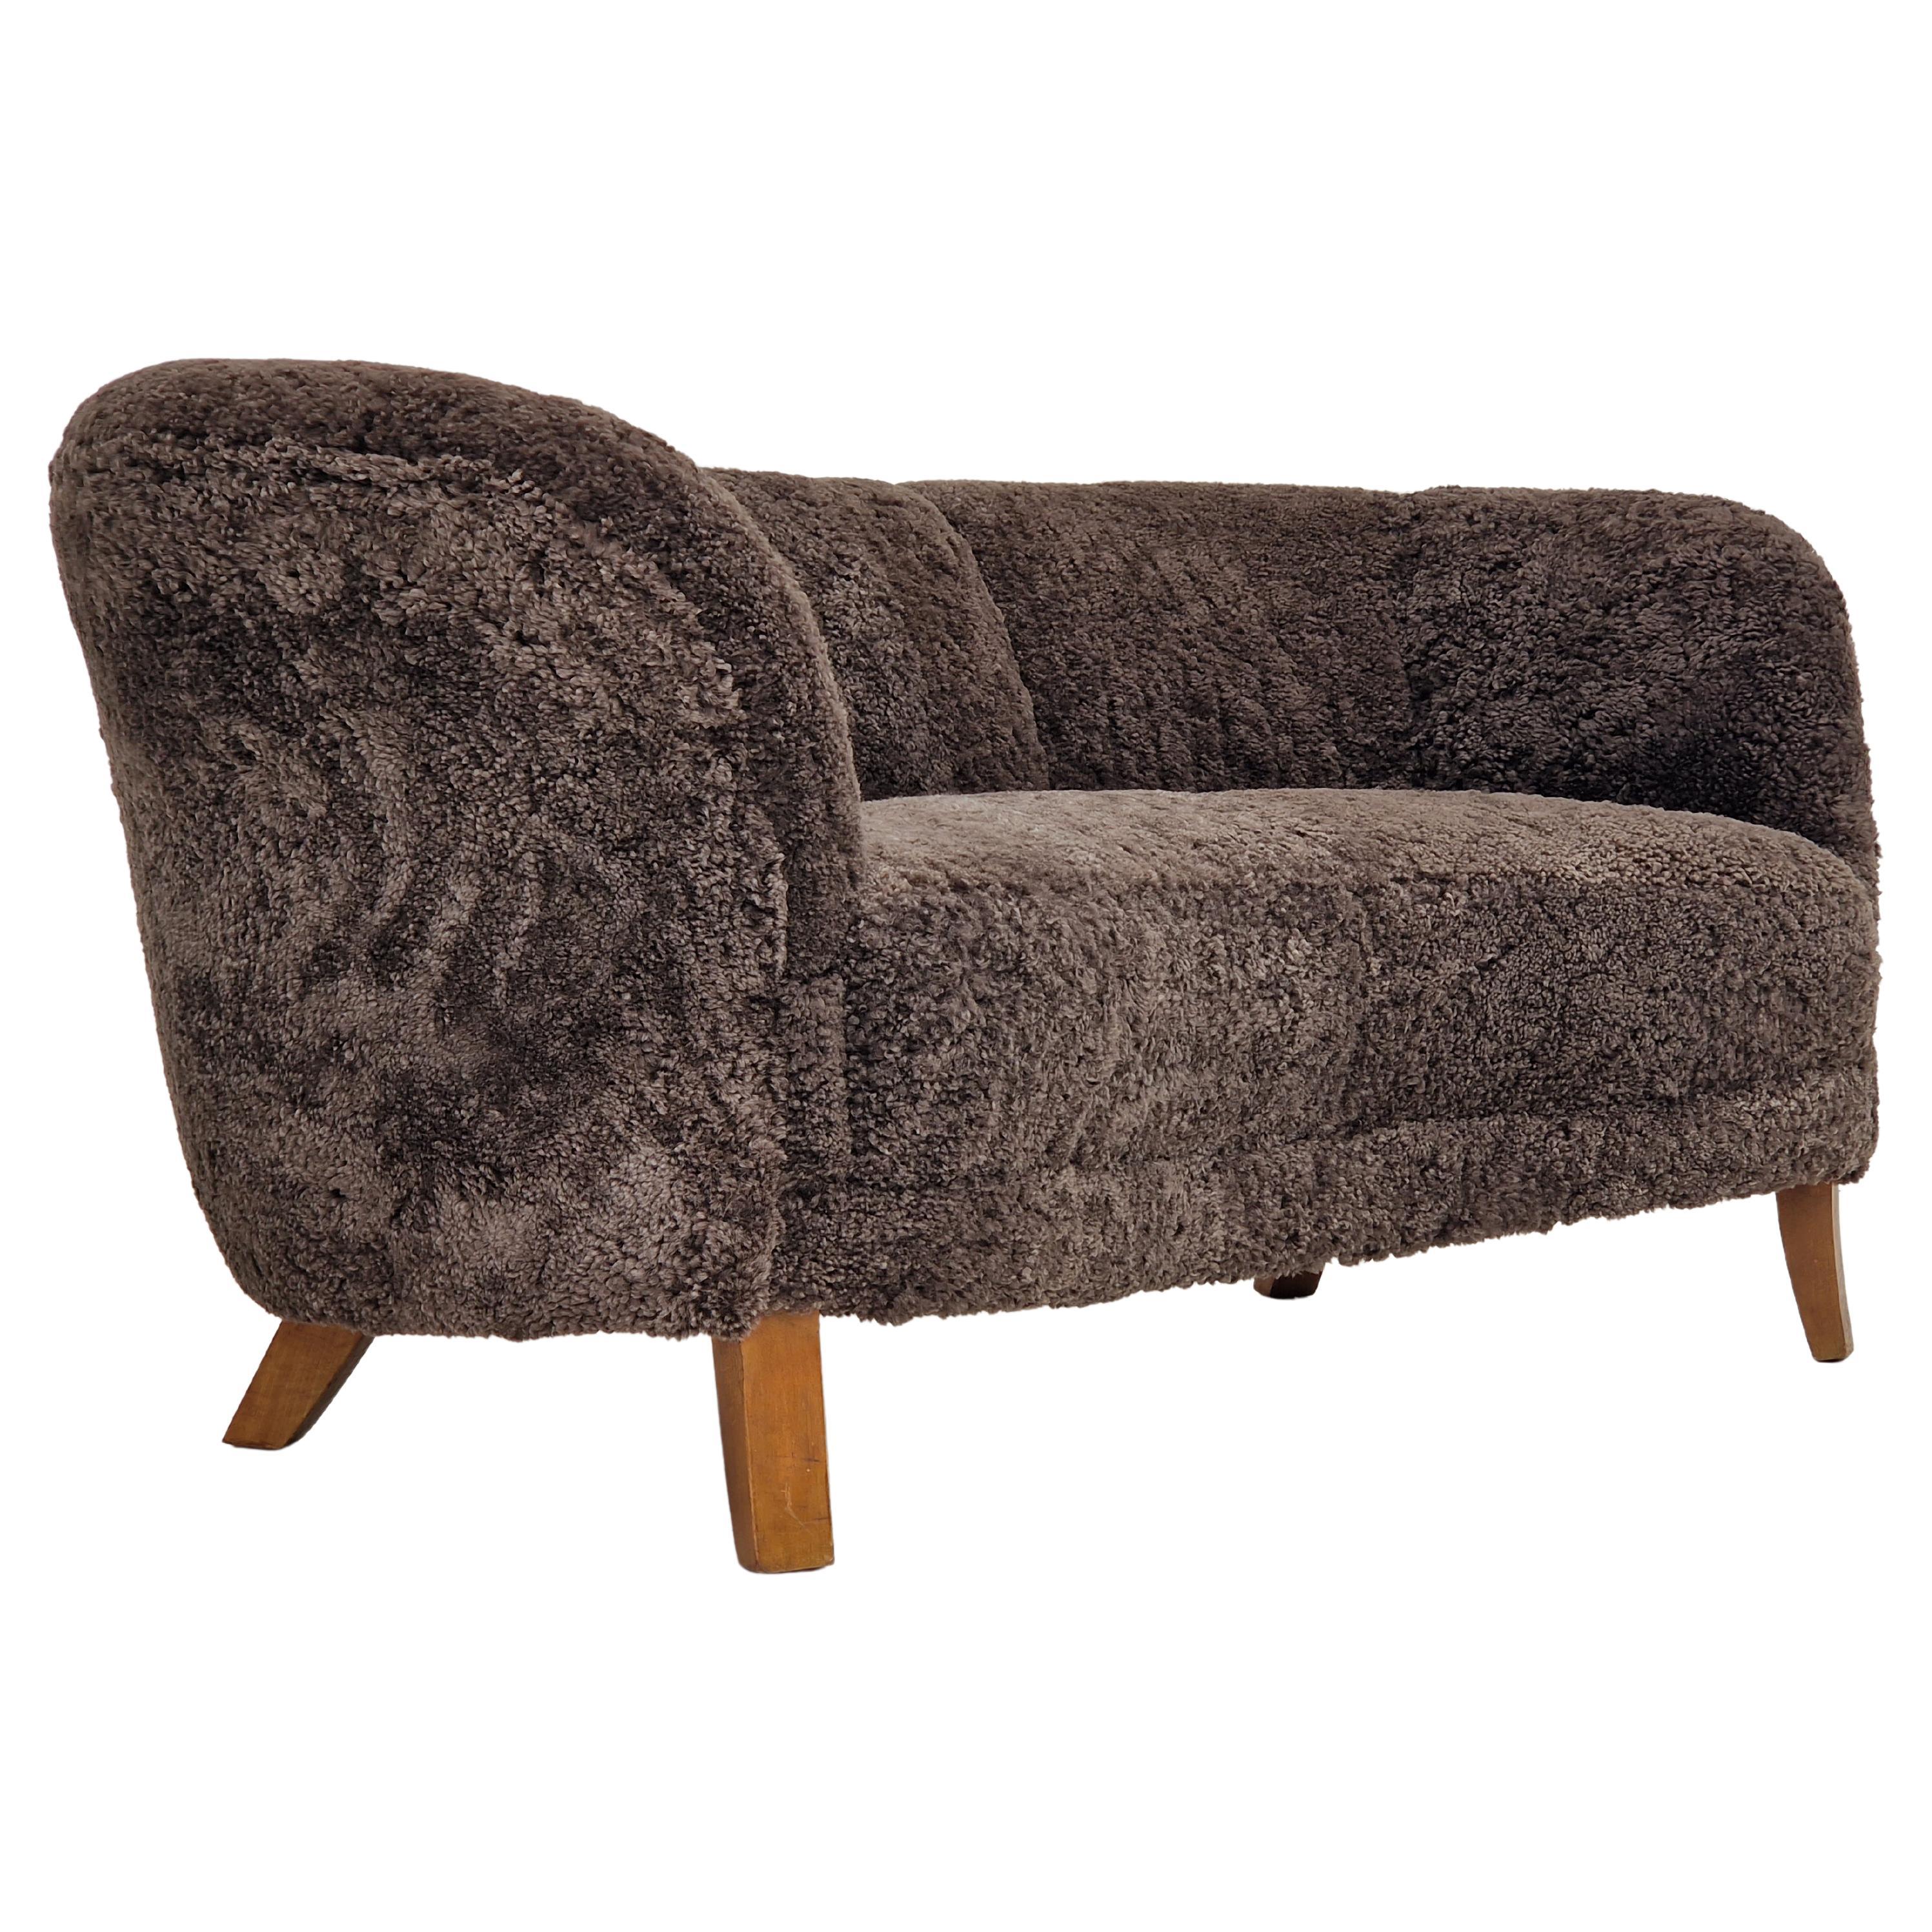 60s, Danish design, renovated seater "Banana" sofa, genuine sheepskin. For Sale